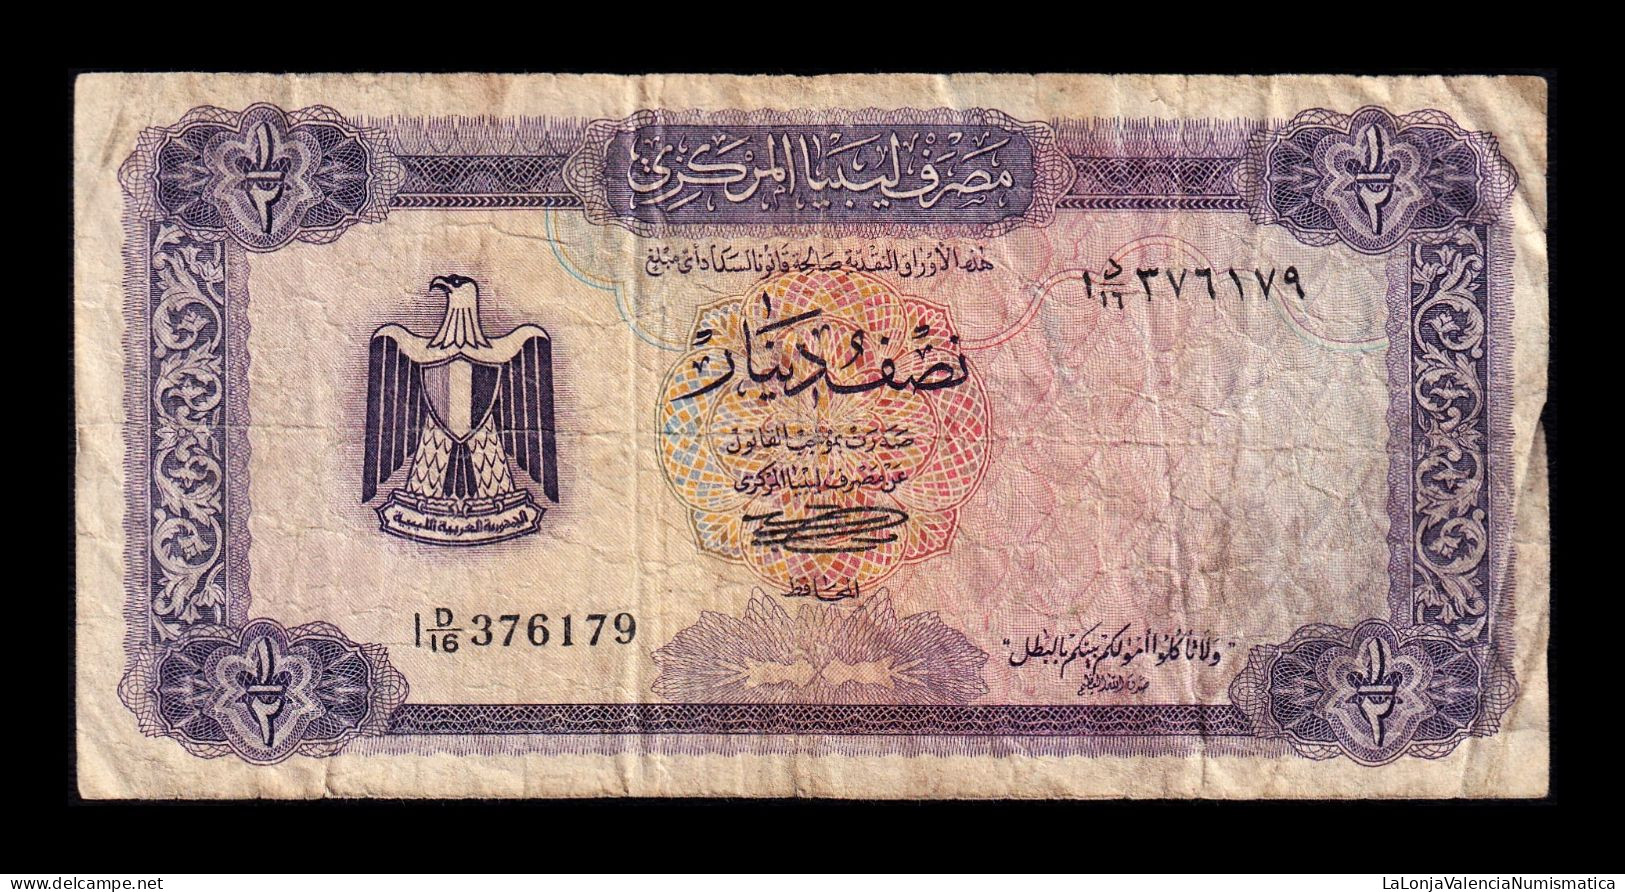 Libia Libya ½ Dinar 1972 Pick 34b Bc F - Libye